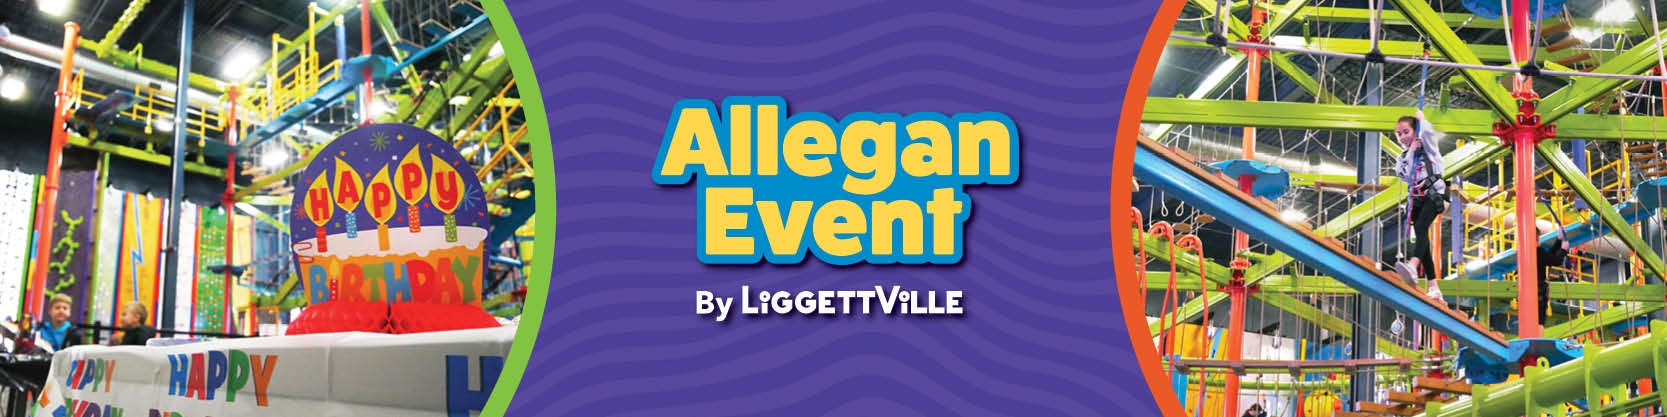 Image for Allegan Event